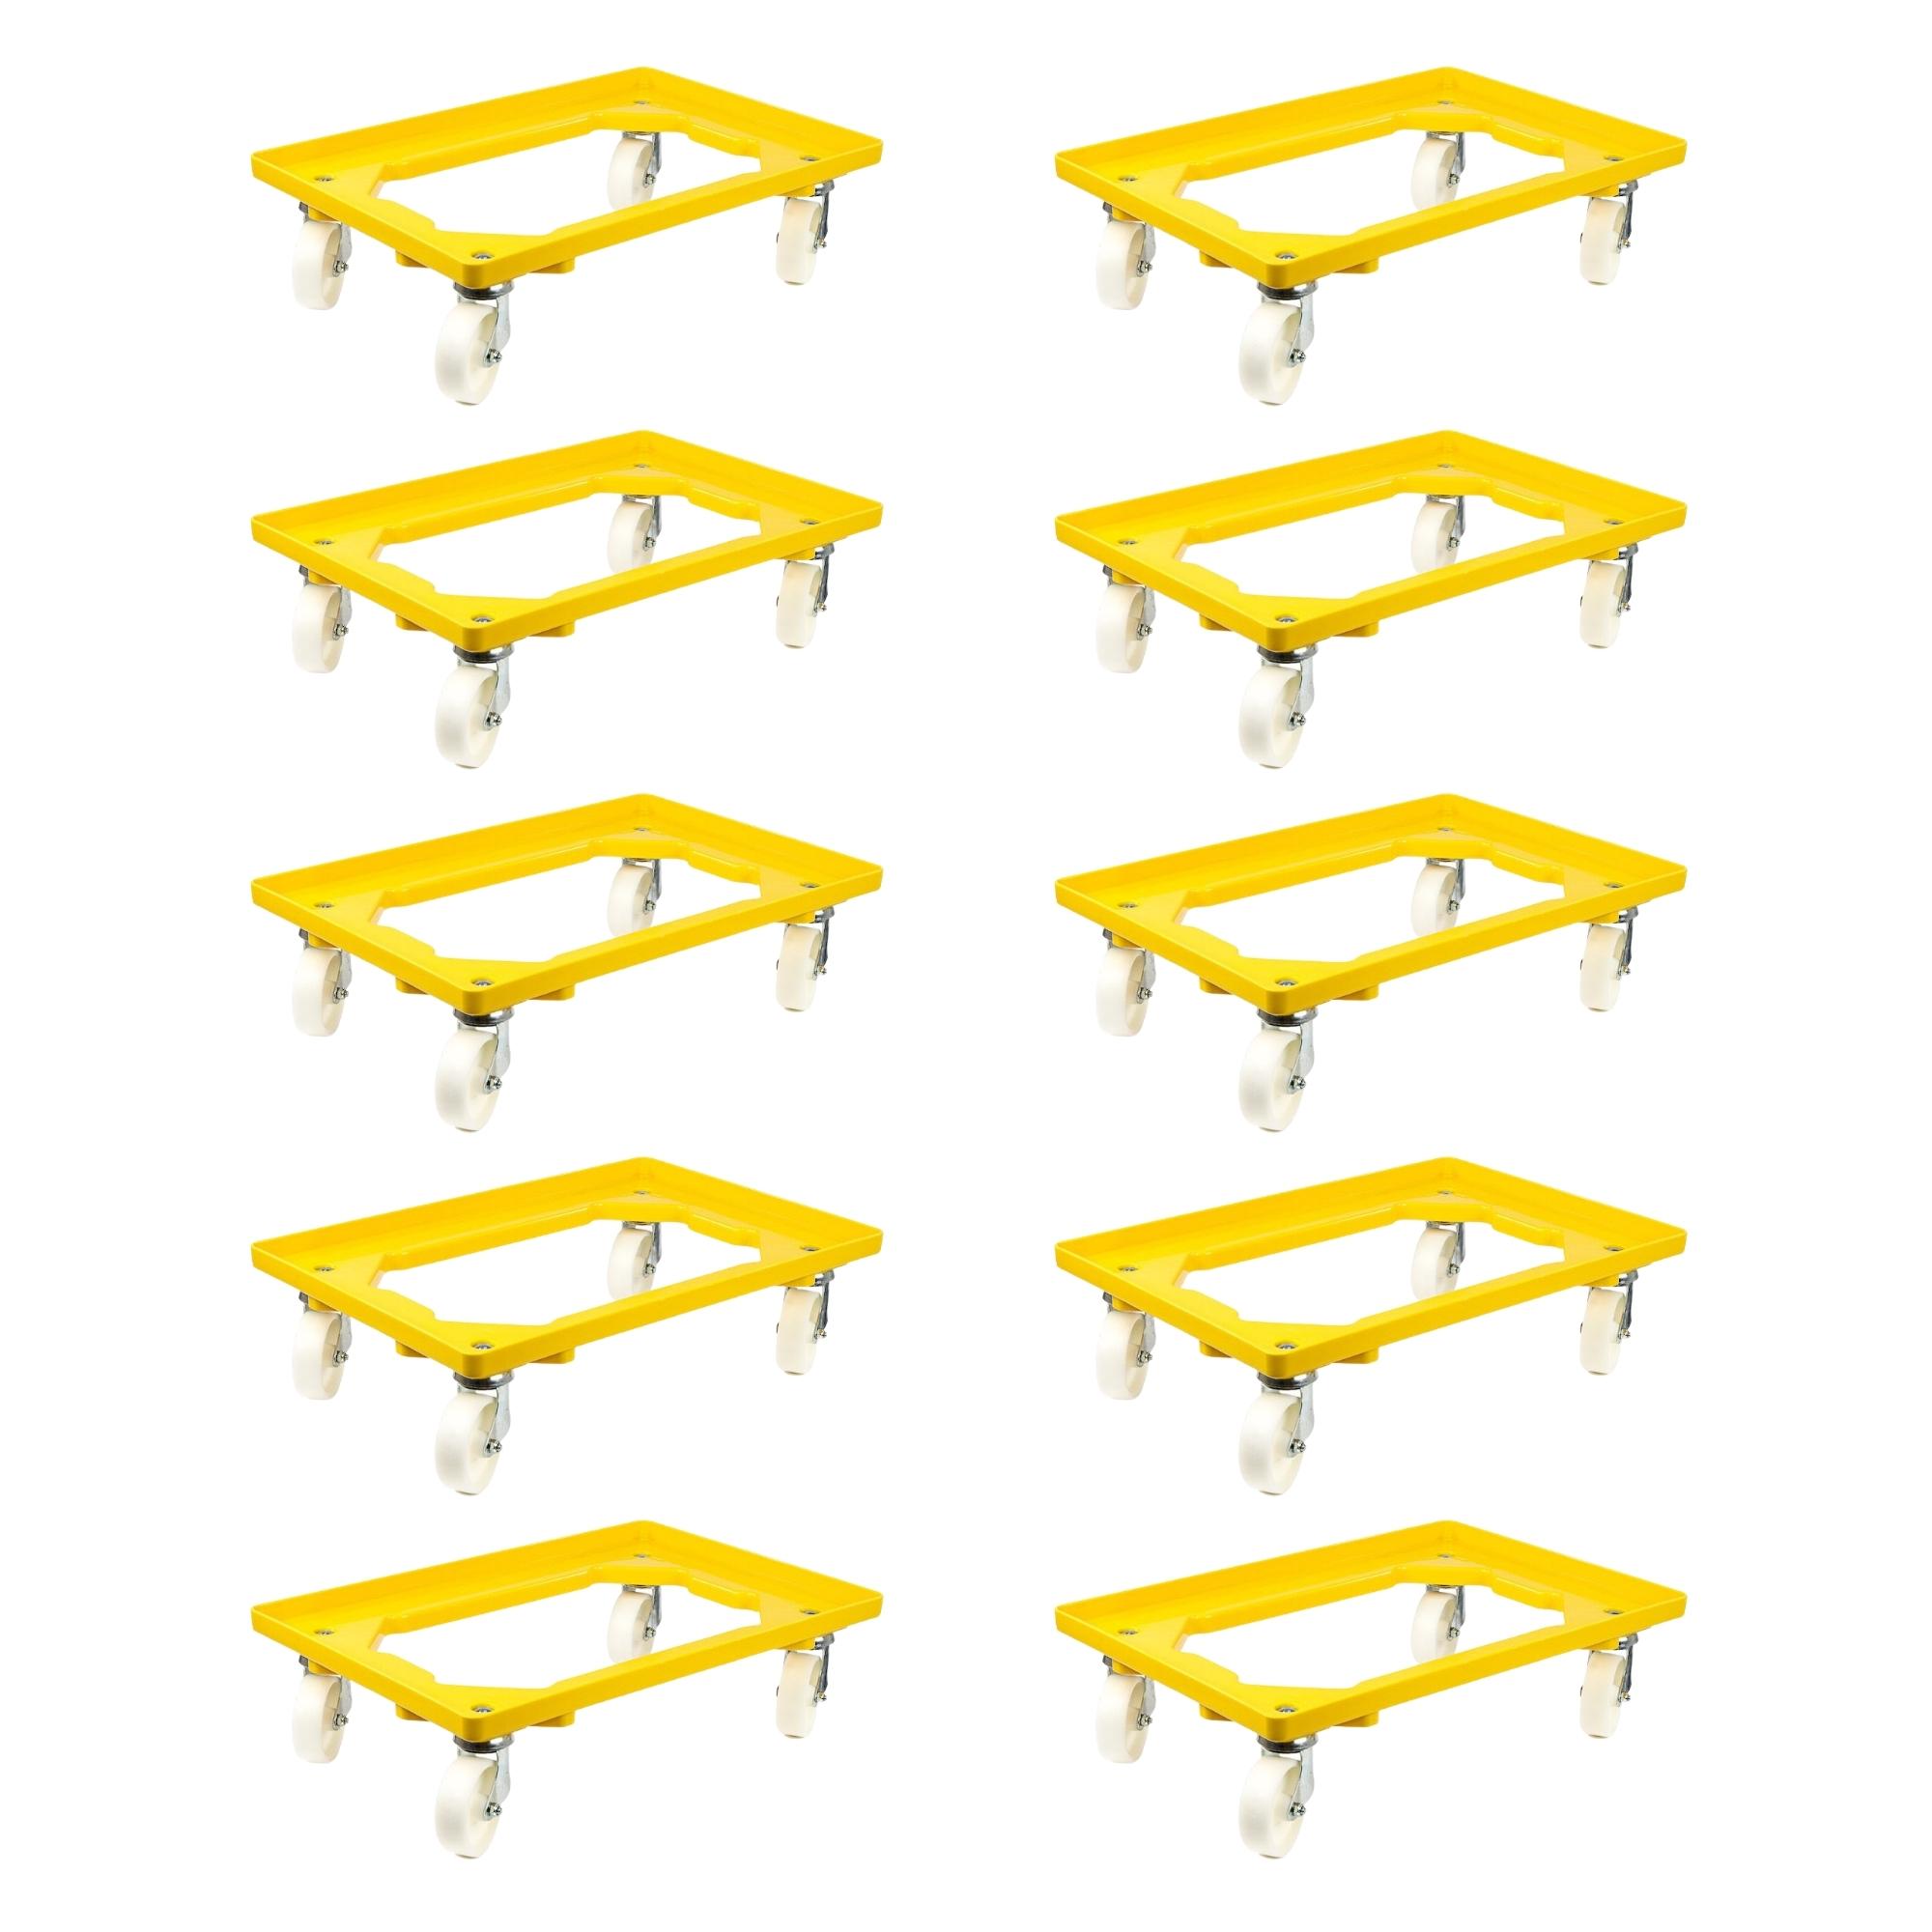 SparSet 10x Transportroller für Euroboxen 60x40cm mit Kunststoffräder gelb | Offenes Deck | 4 Lenkrollen | Traglast 300kg | Kistenroller Logistikroller Rollwagen Profi-Fahrgestell